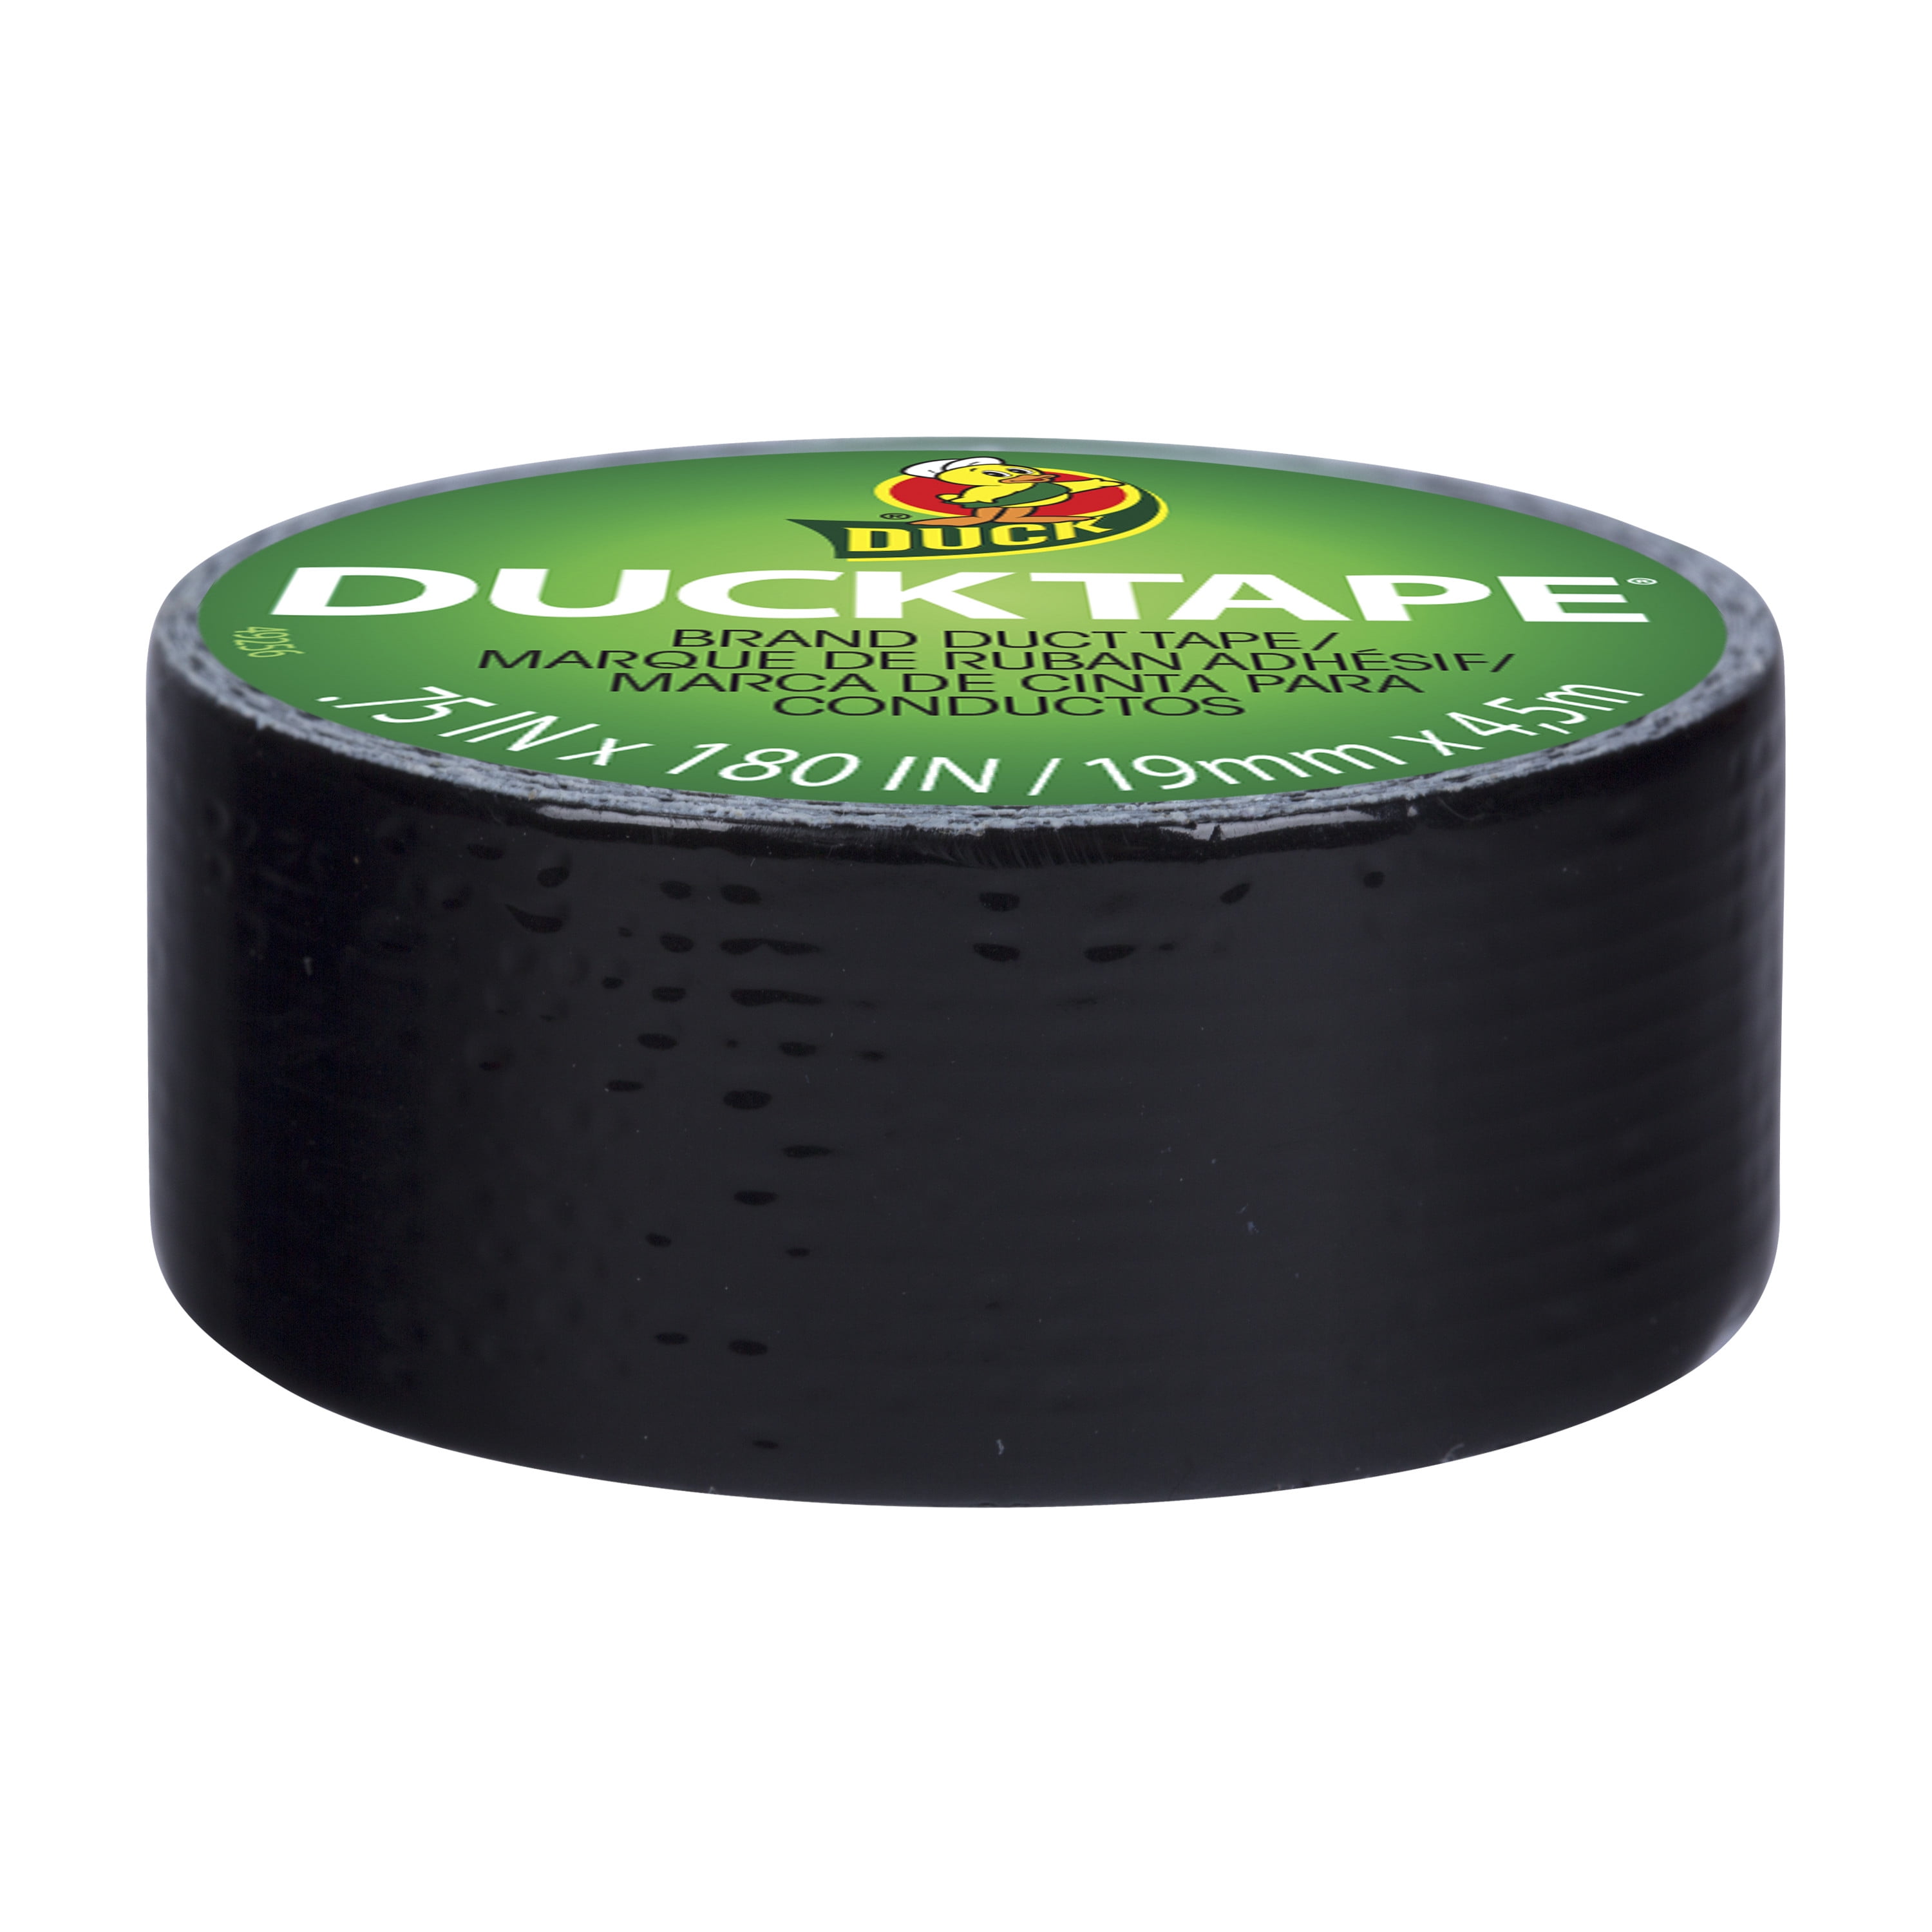 Ducktape Original Tape 50mmx10m Black (Pack of 6) 260111